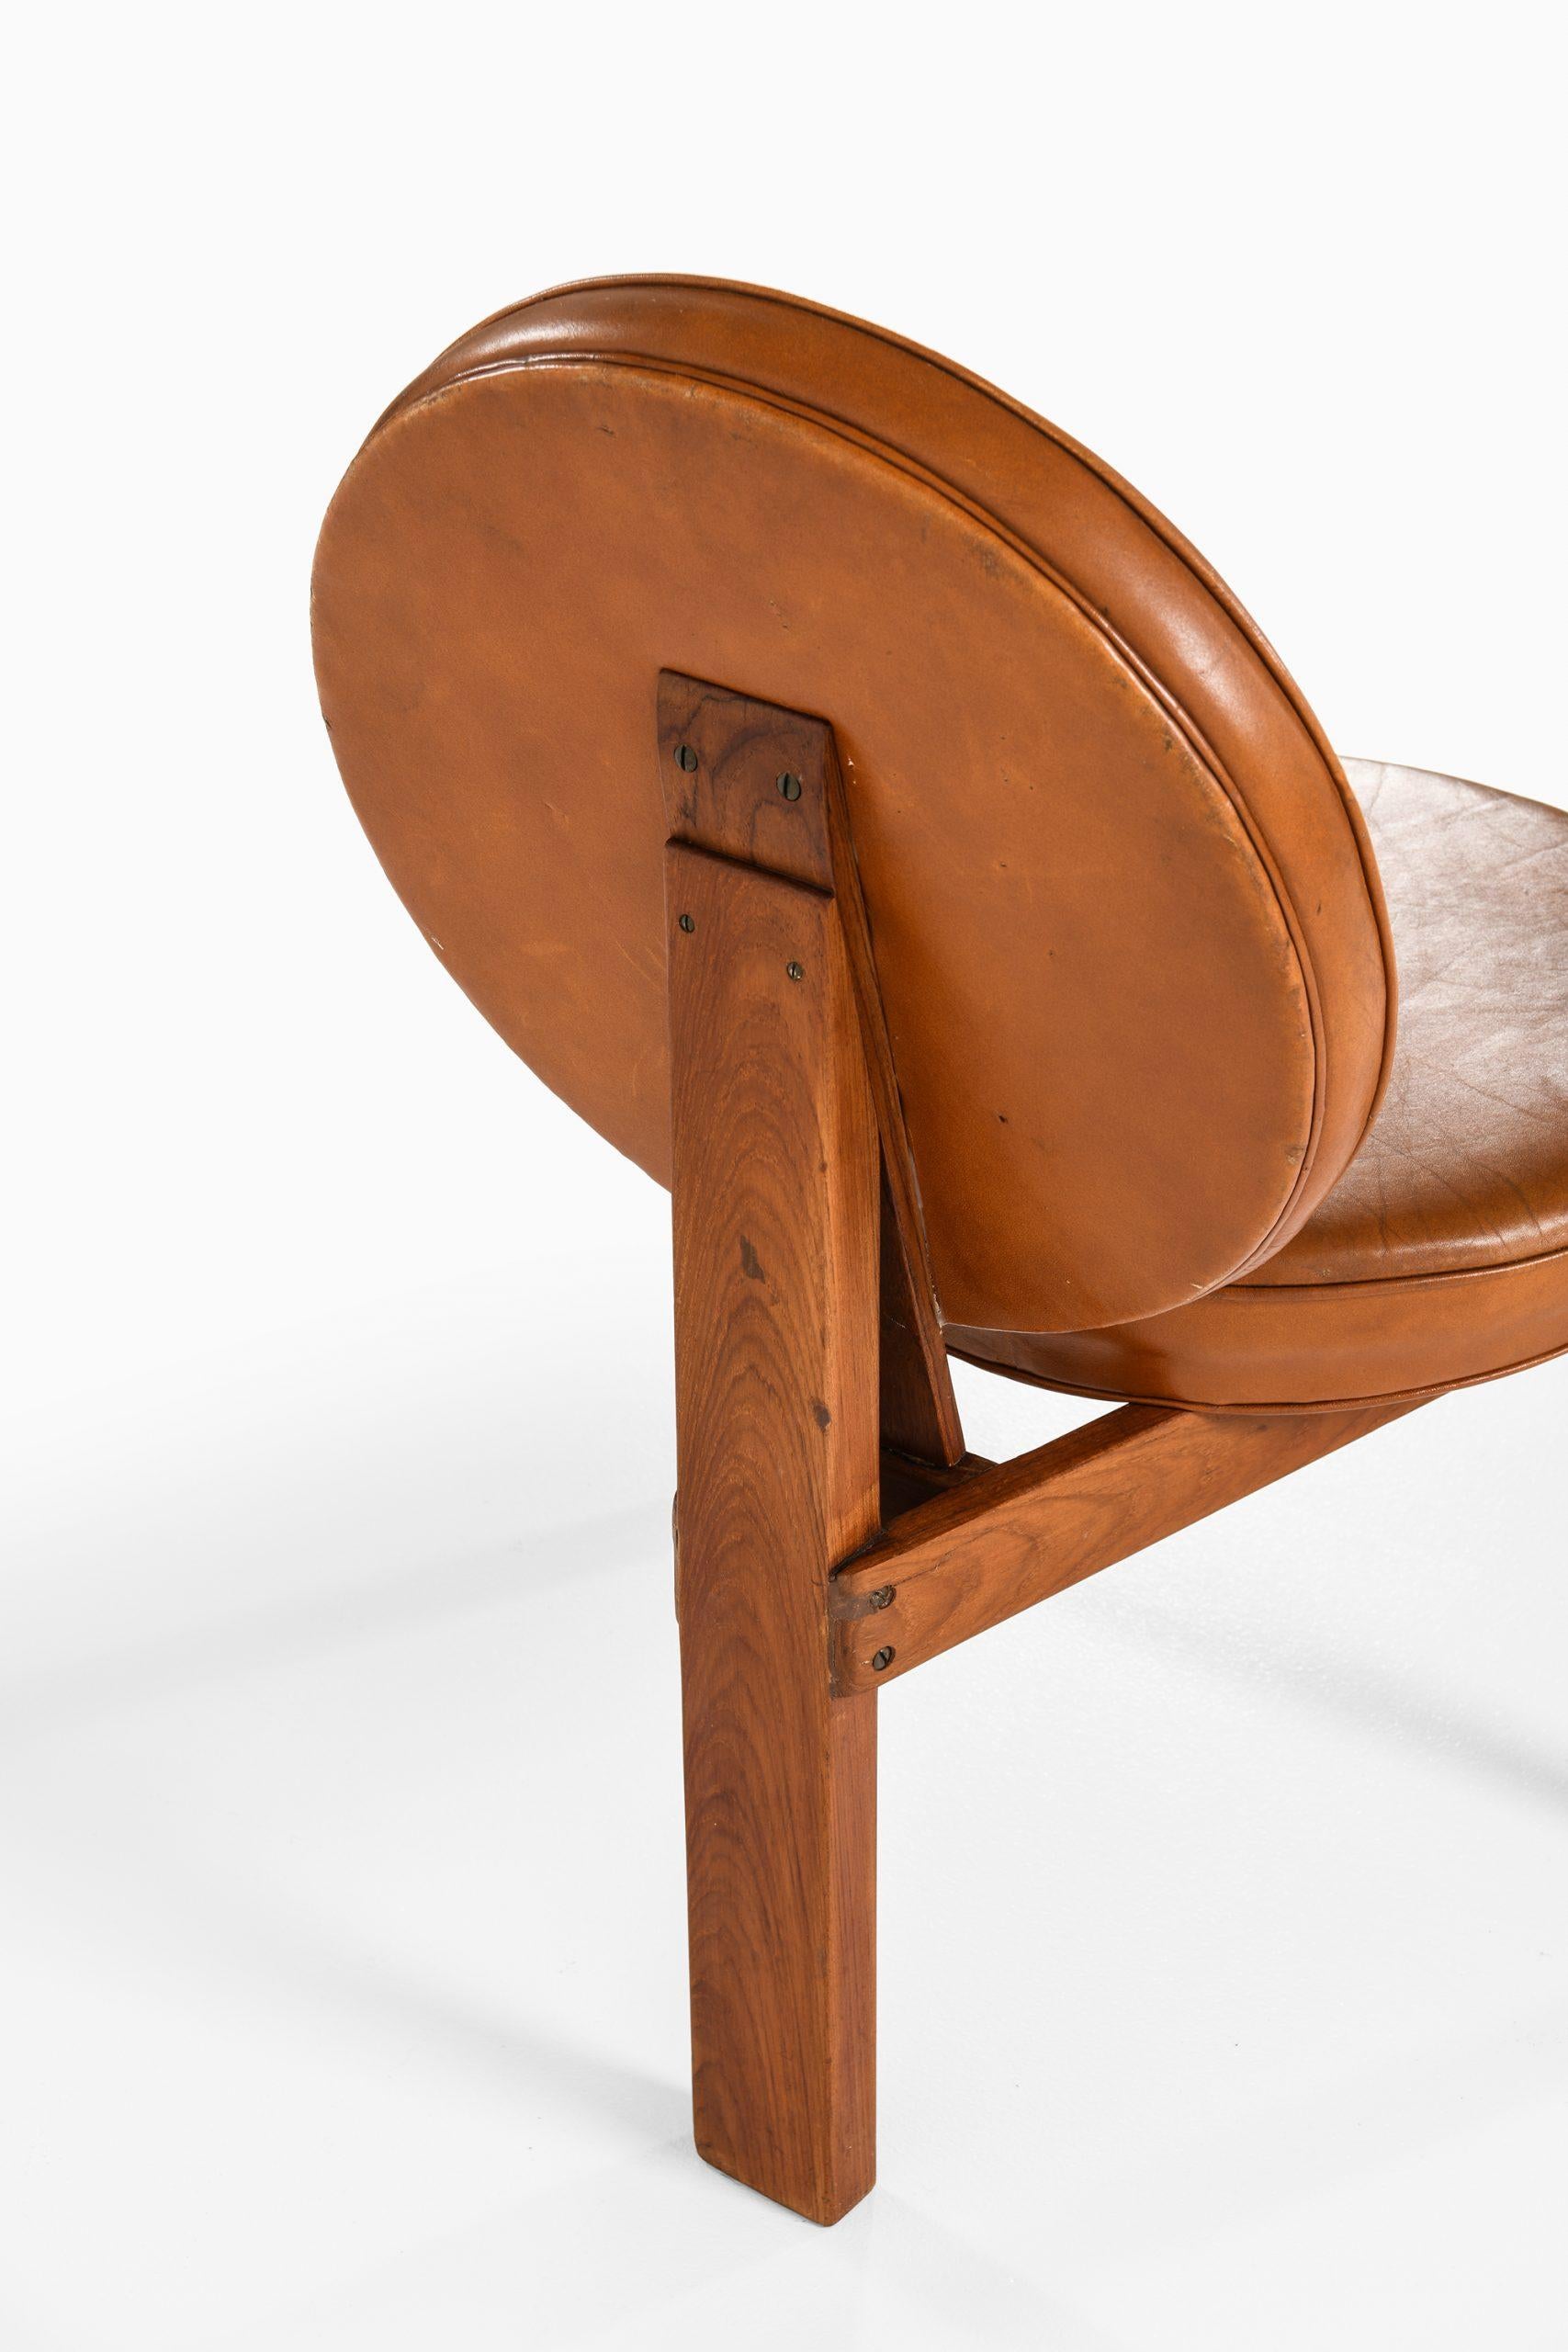 Scandinavian Modern Bent Møller Jepsen Easy Chair Produced by Sitamo Møbler in Denmark